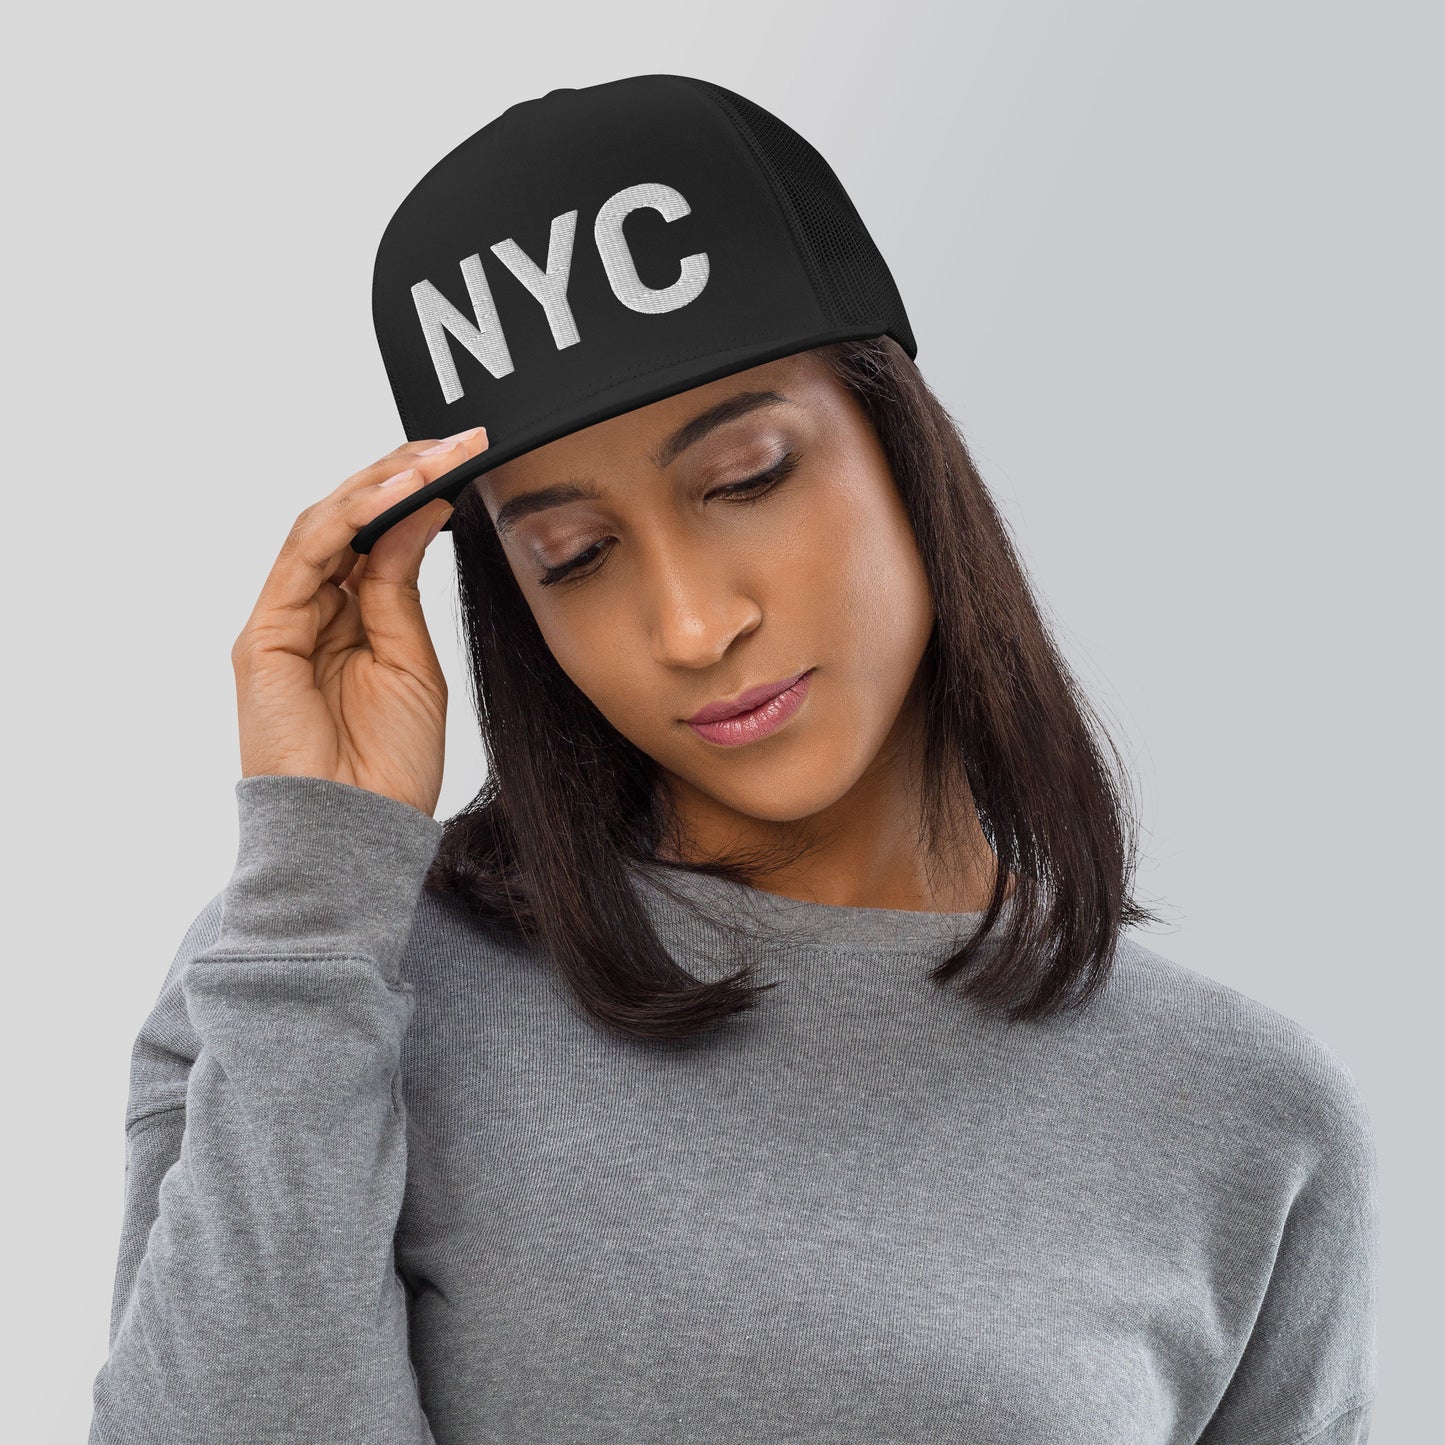 NYC Trucker Hat